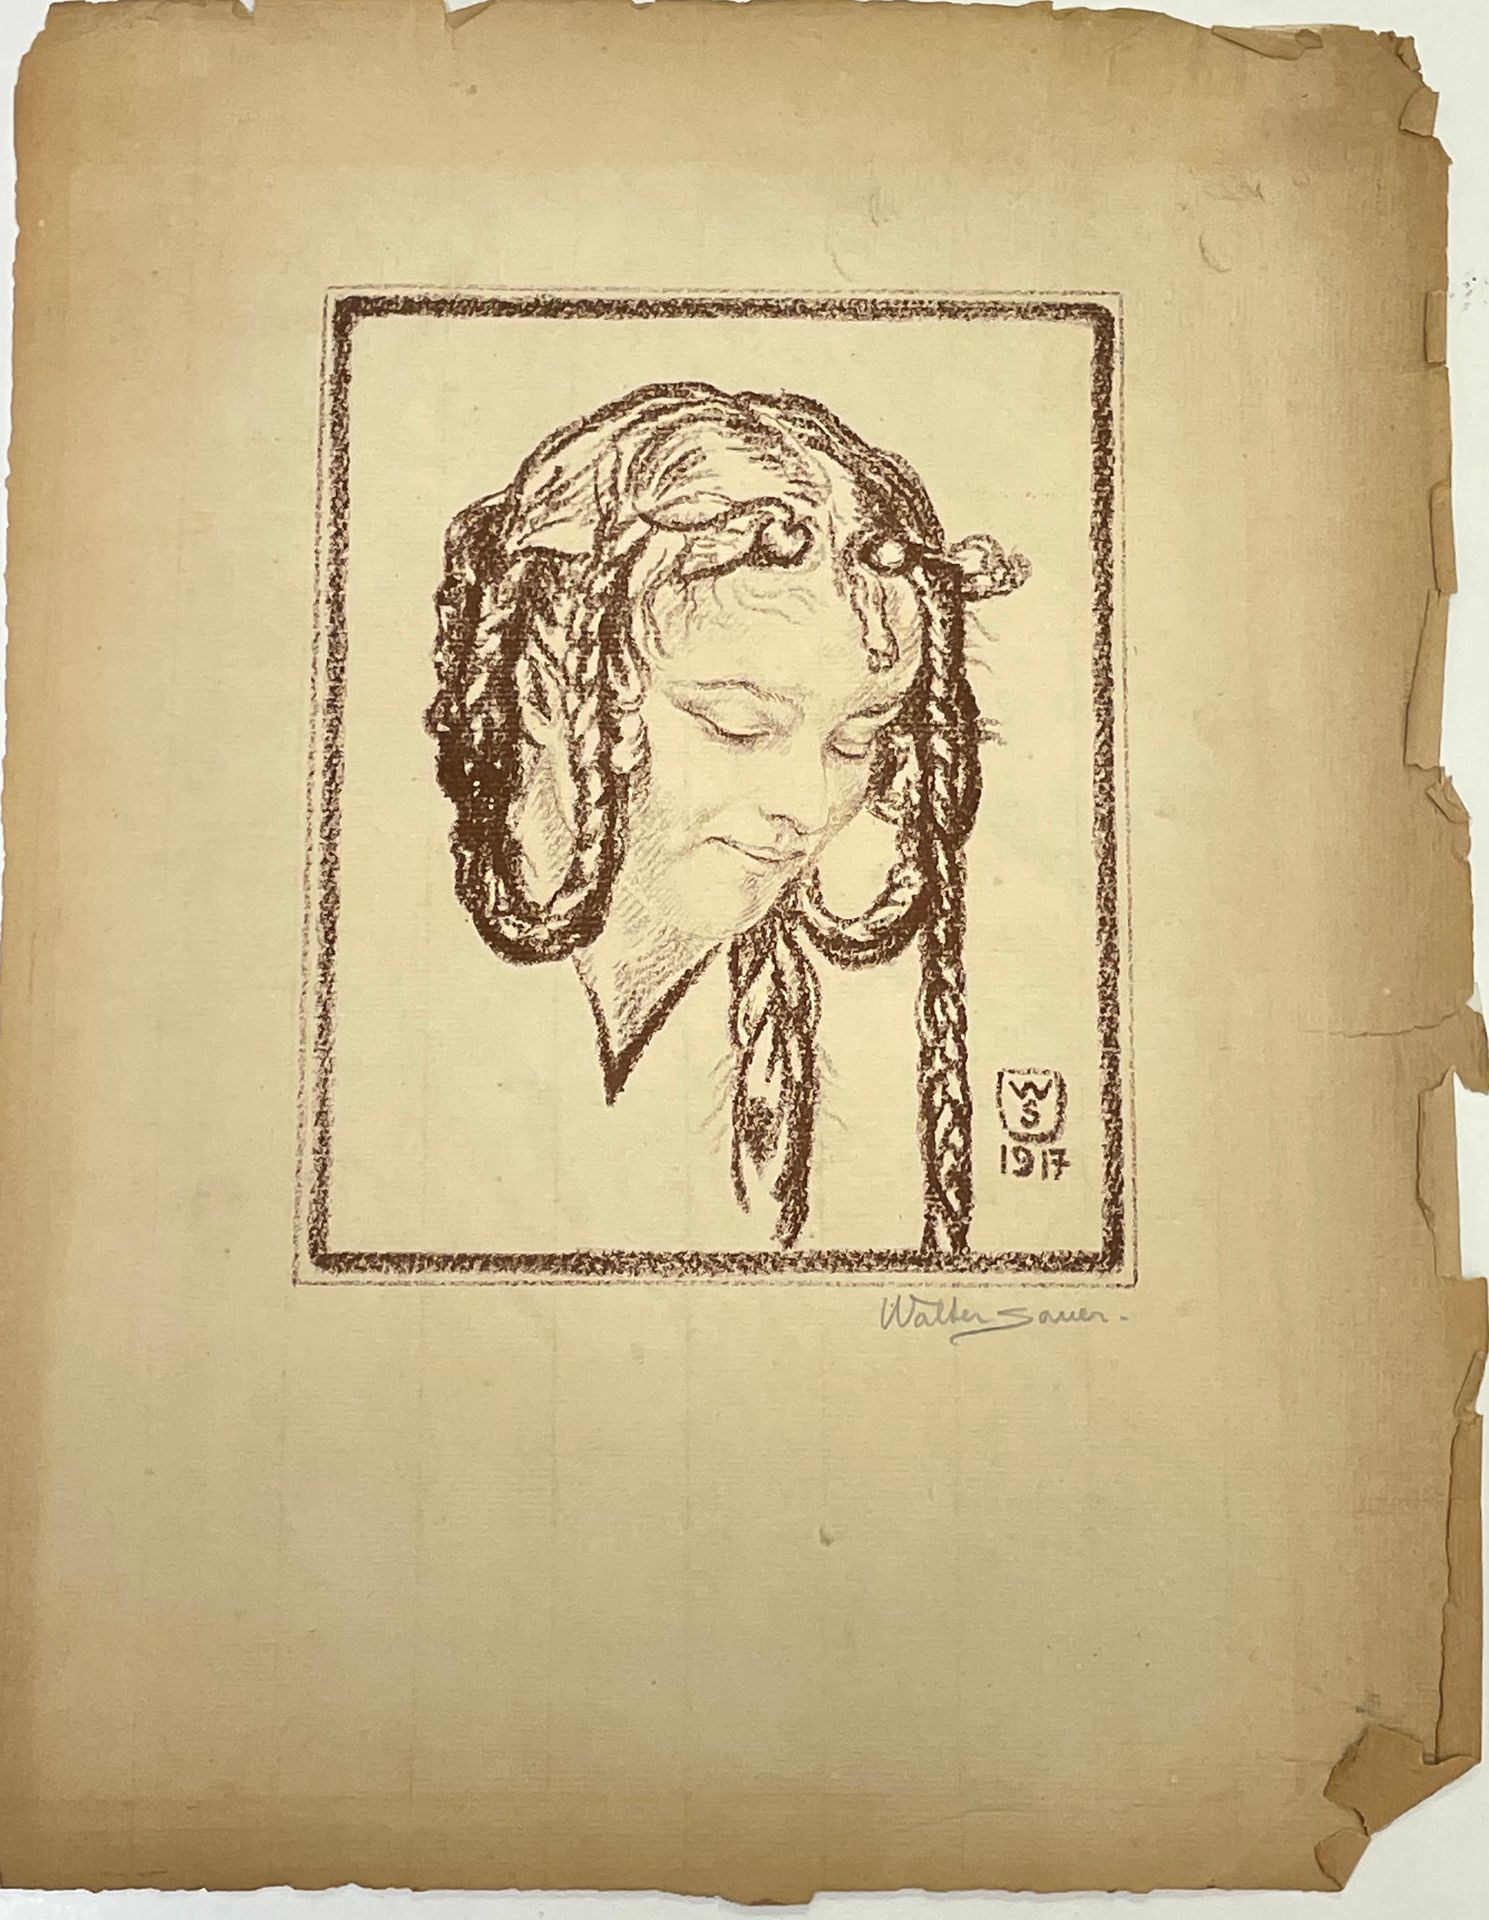 SAUER (Walter). "年轻女孩"（1917年）。单色石板画，印在铺纸上，用铅笔签名。底座尺寸：39.5 x 30厘米；主题：21 x 17.5厘米（&hellip;